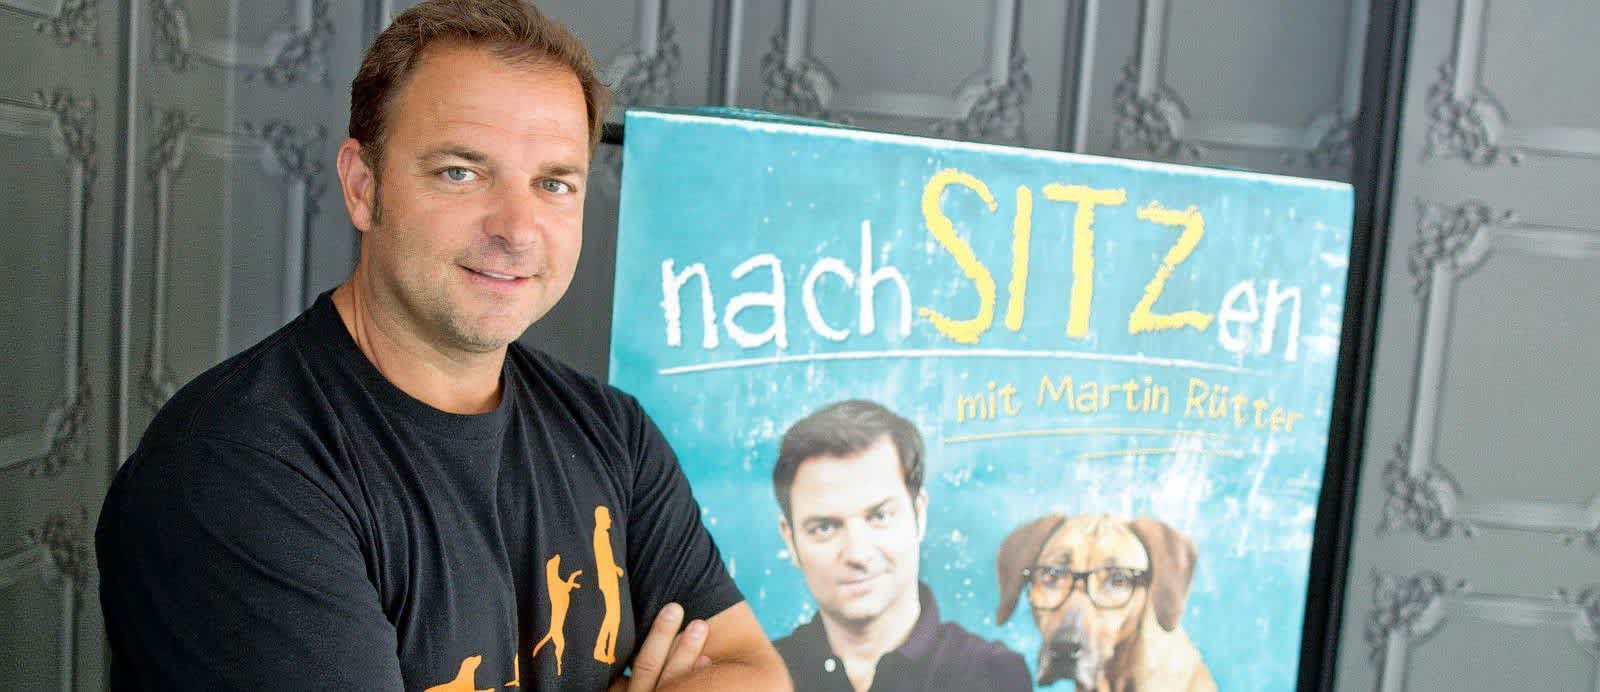 Martin Rütter at bigBOX Allgäu Tickets